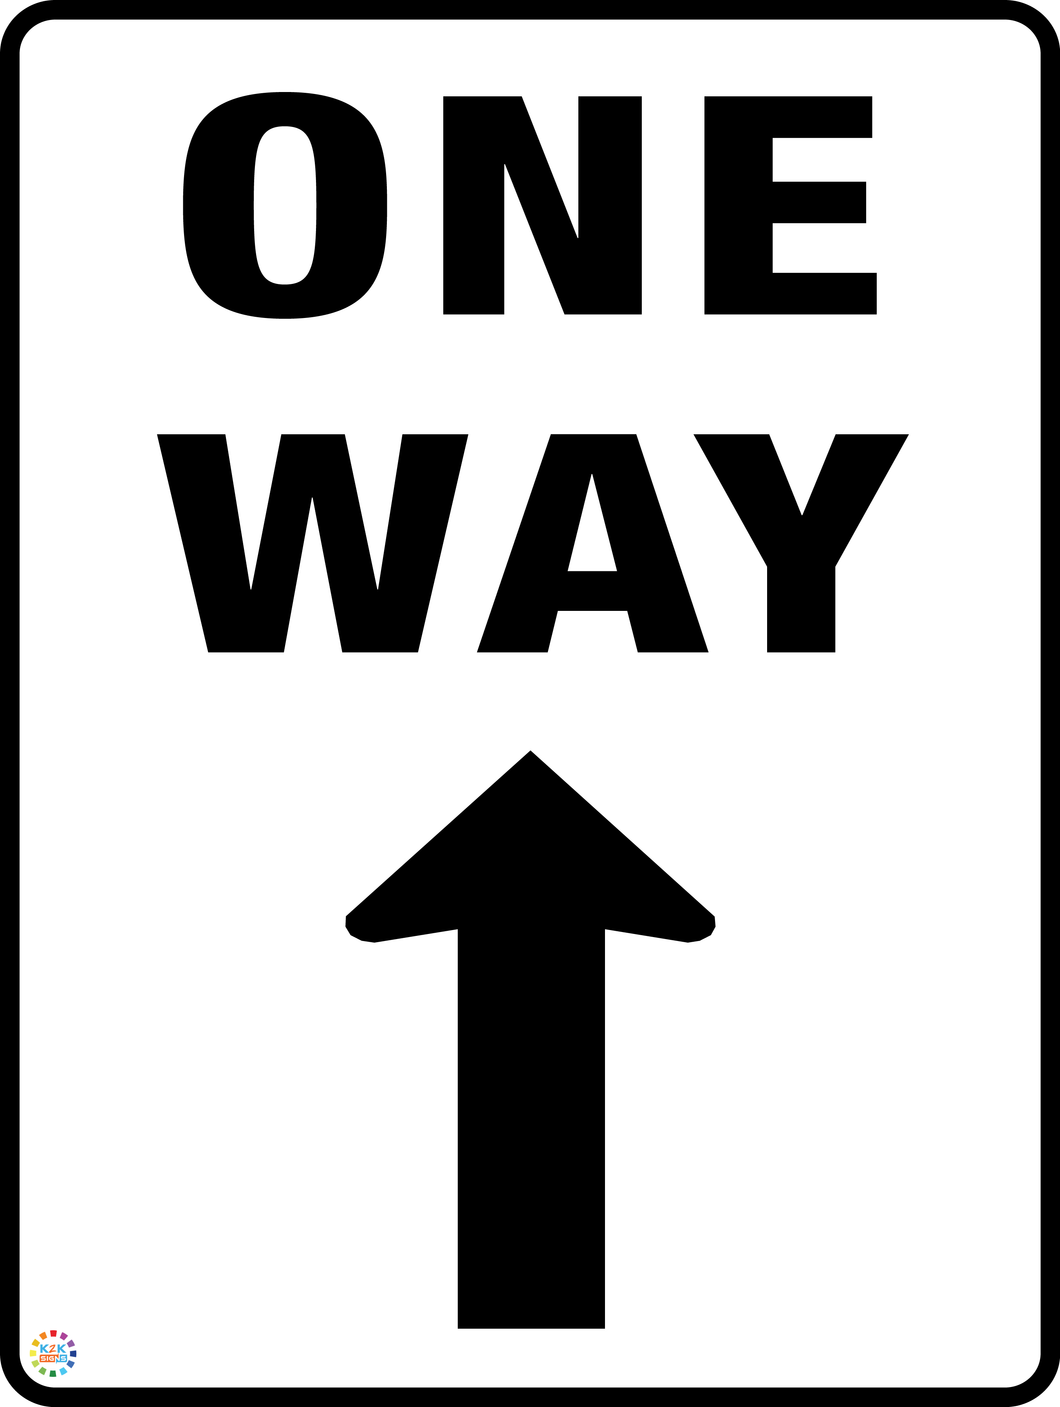 One Way (Straight Arrow) Sign